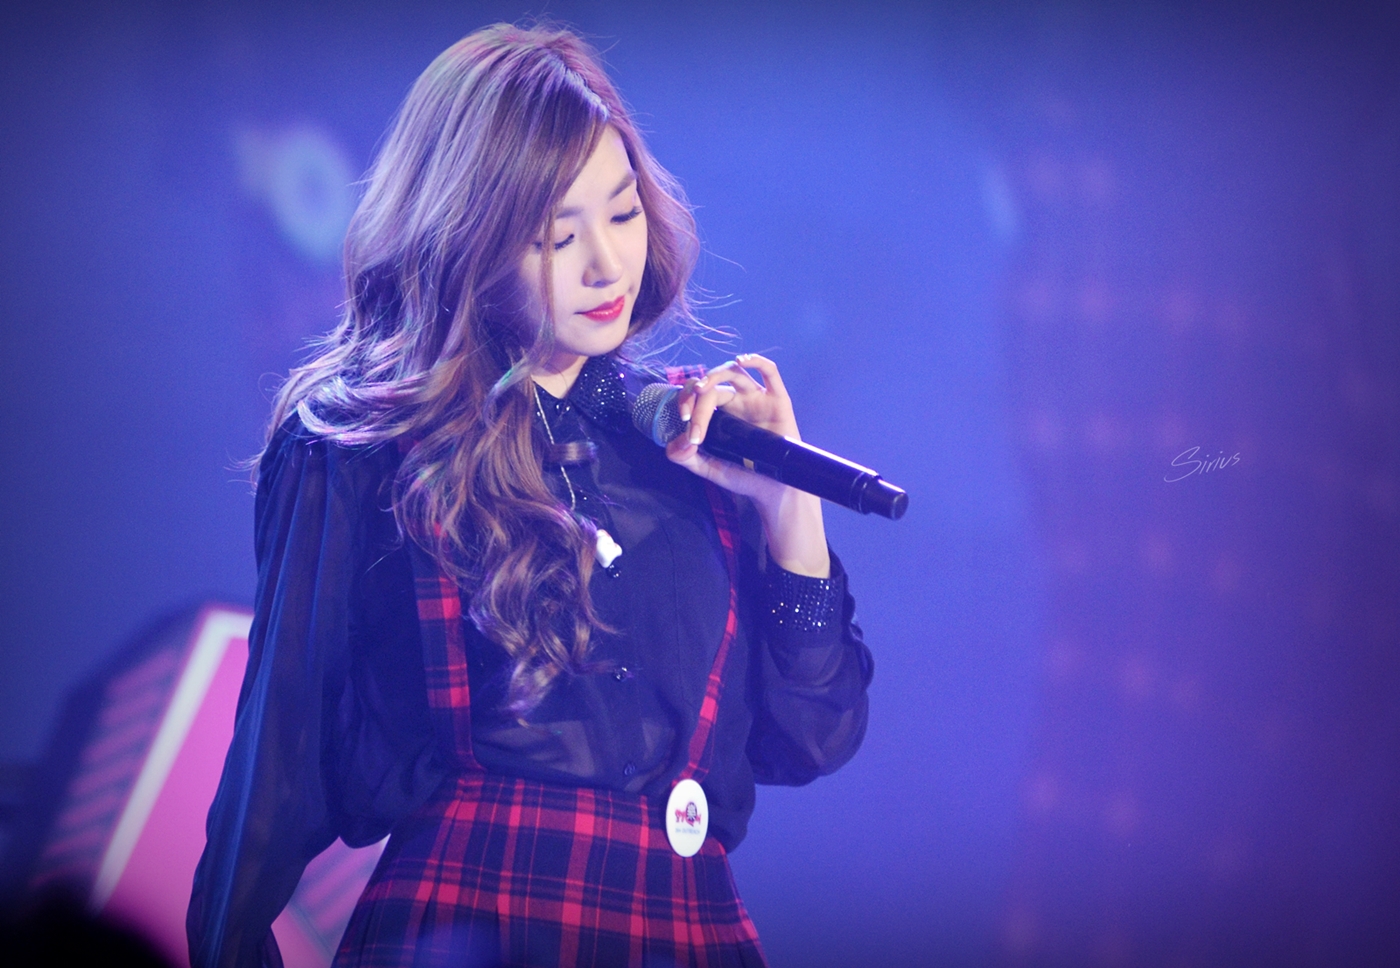 [PIC][11-11-2014]TaeTiSeo biểu diễn tại "Passion Concert 2014" ở Seoul Jamsil Gymnasium vào tối nay 2126DA4E5462400E1F575C